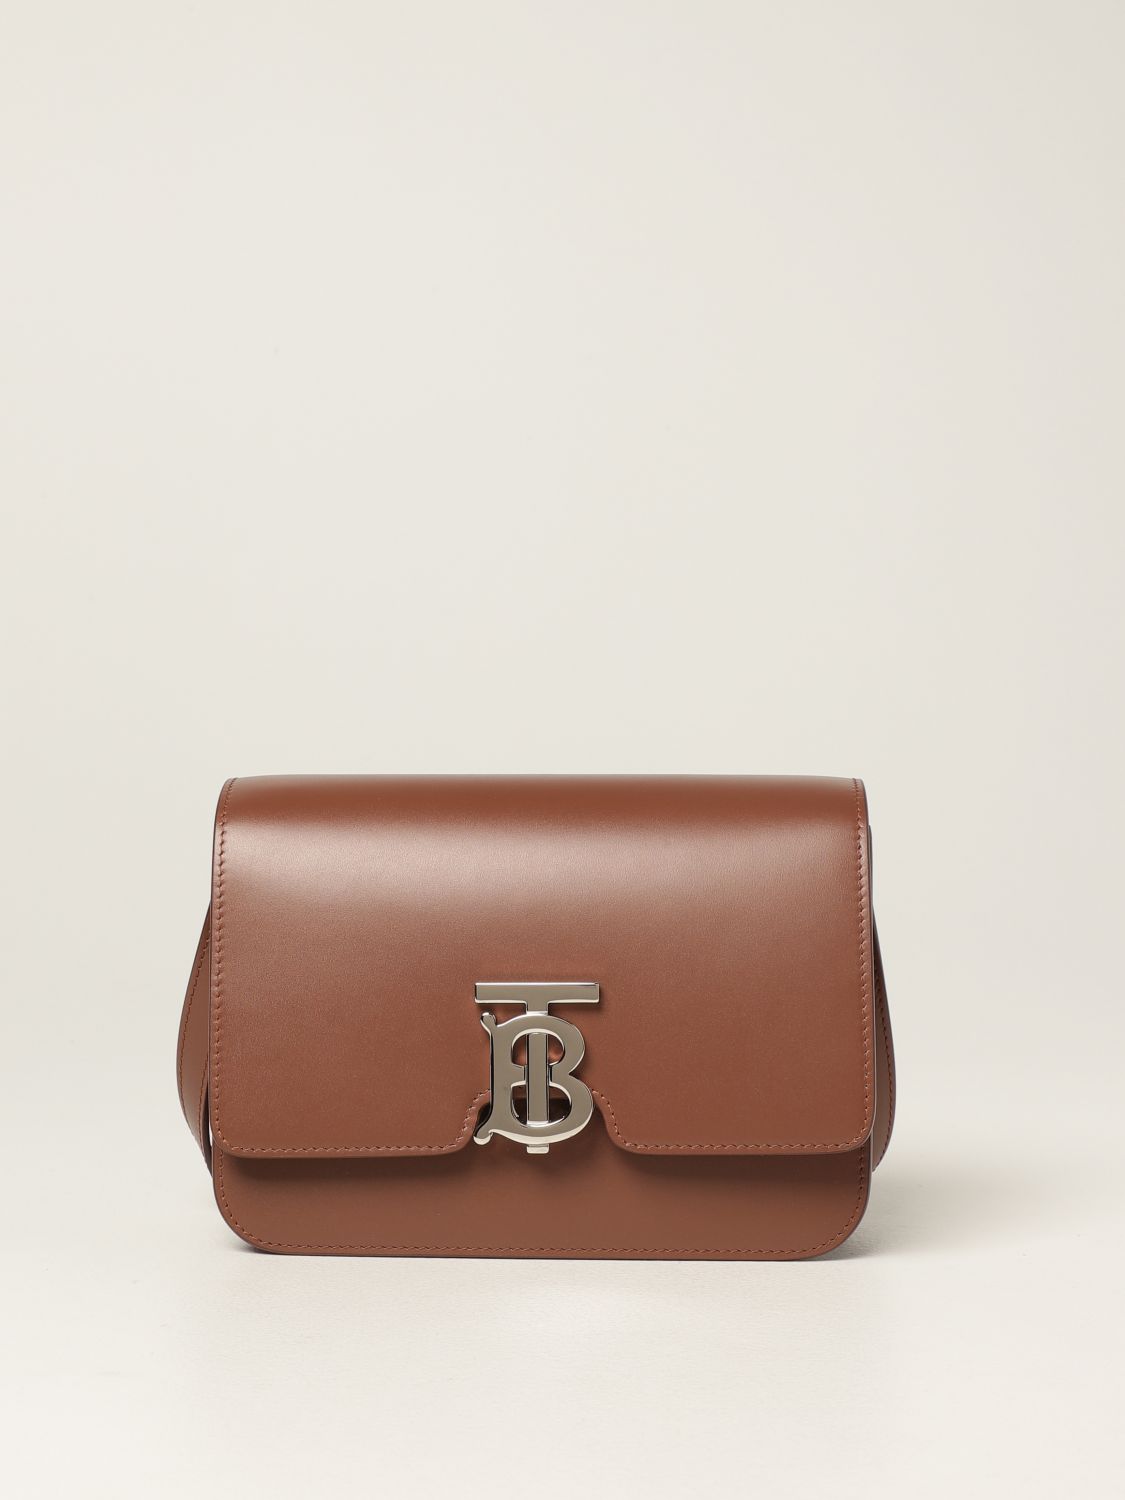 Burberry Malt Brown Tb Leather Bag